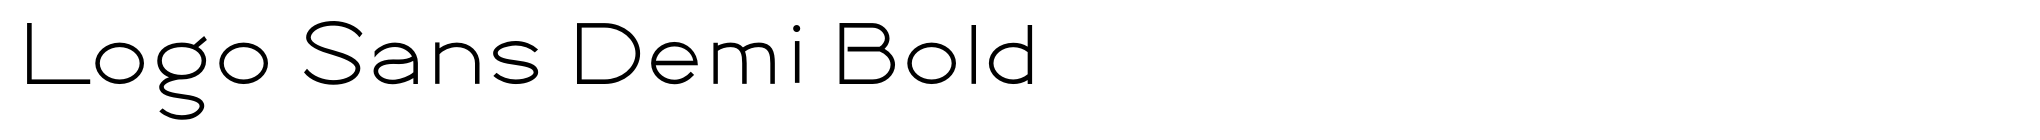 Logo Sans Demi Bold image